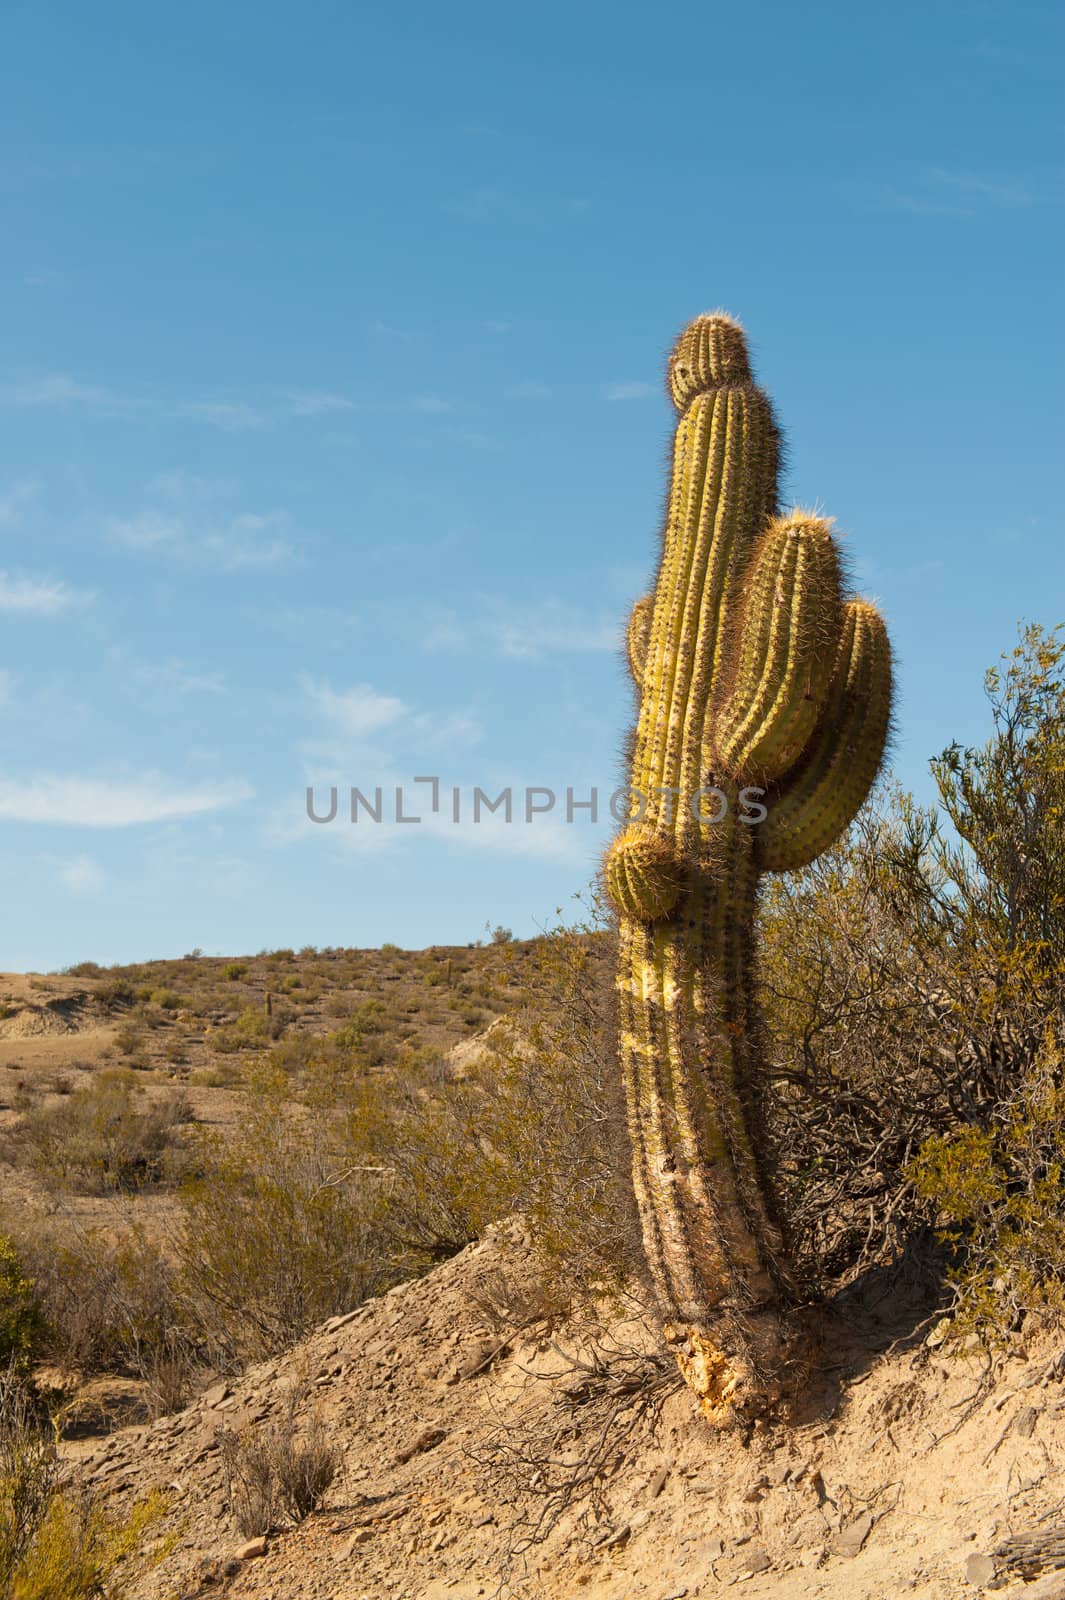 Cactus in a desert landscape, northern argentina.